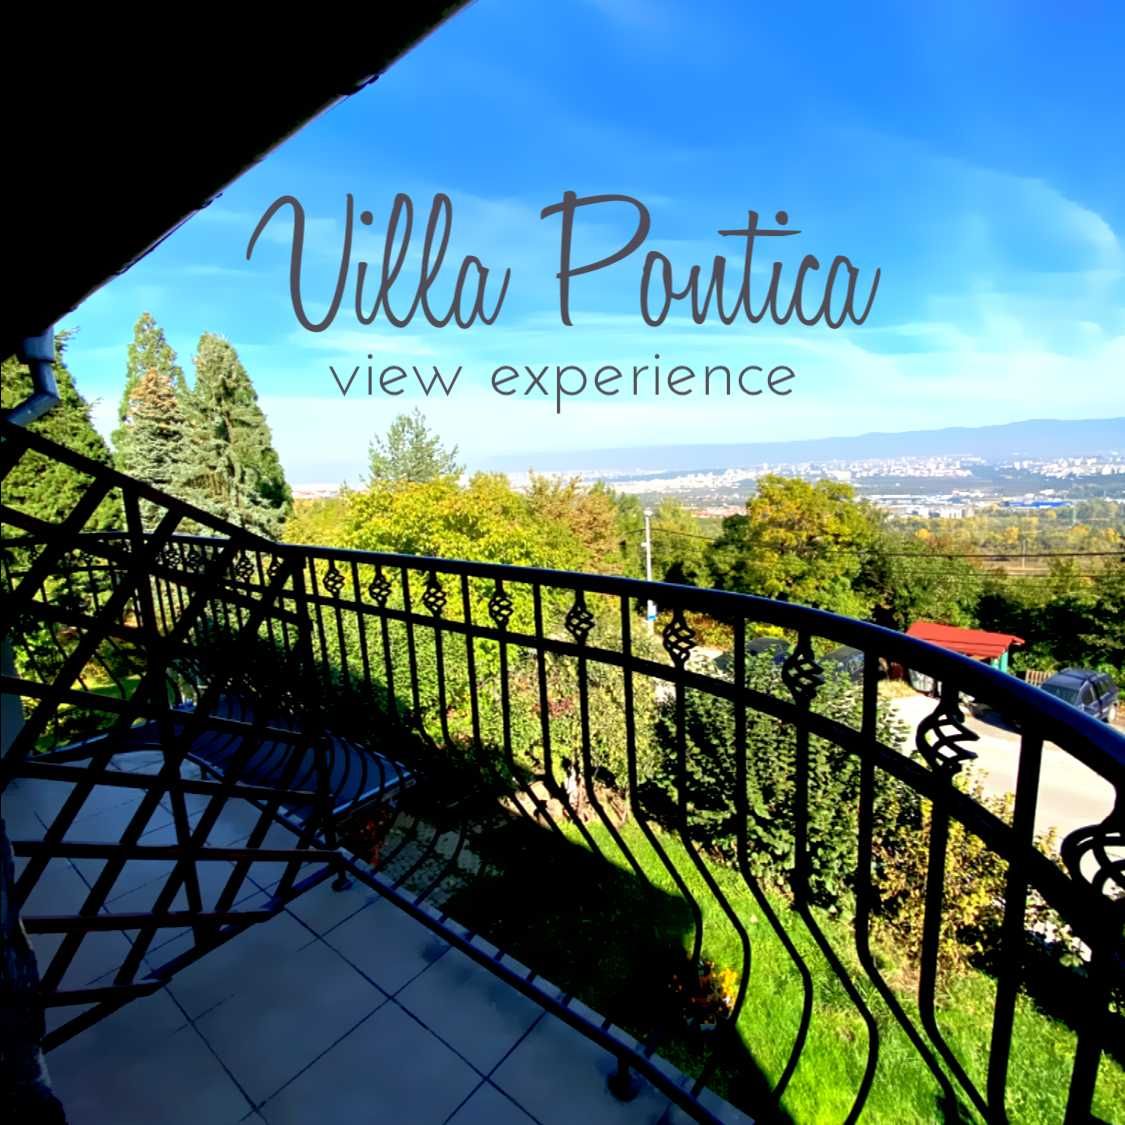 Вила Понтика - Villa Pontica - стаи под наем, нощувки, почивка сред пр